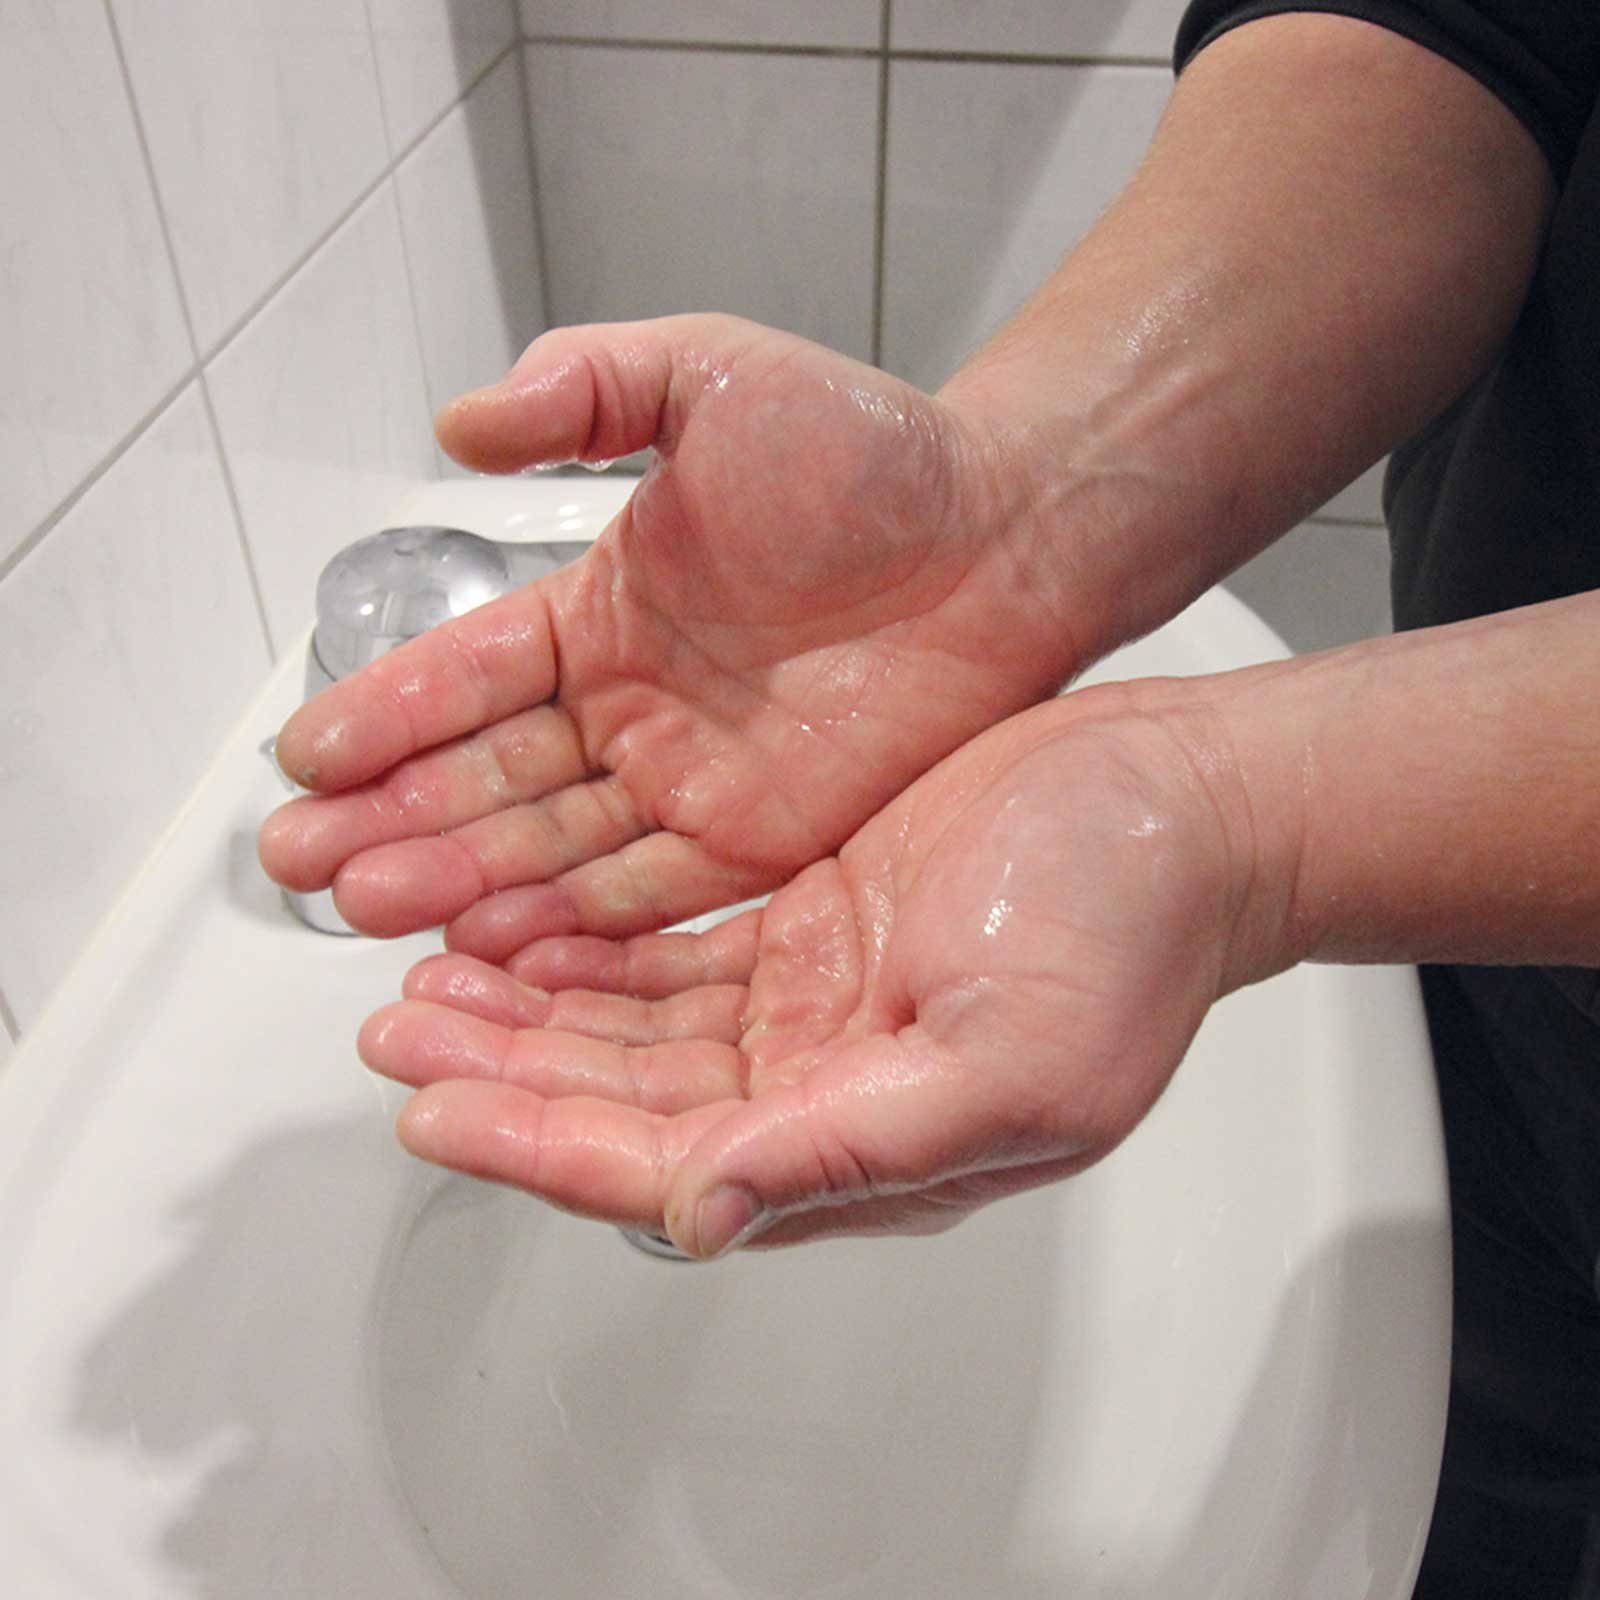 Technoclean Seife Handreiniger TECHNOLIT Handwaschpaste TECHNOLIT® 3L Waschpaste Handcreme